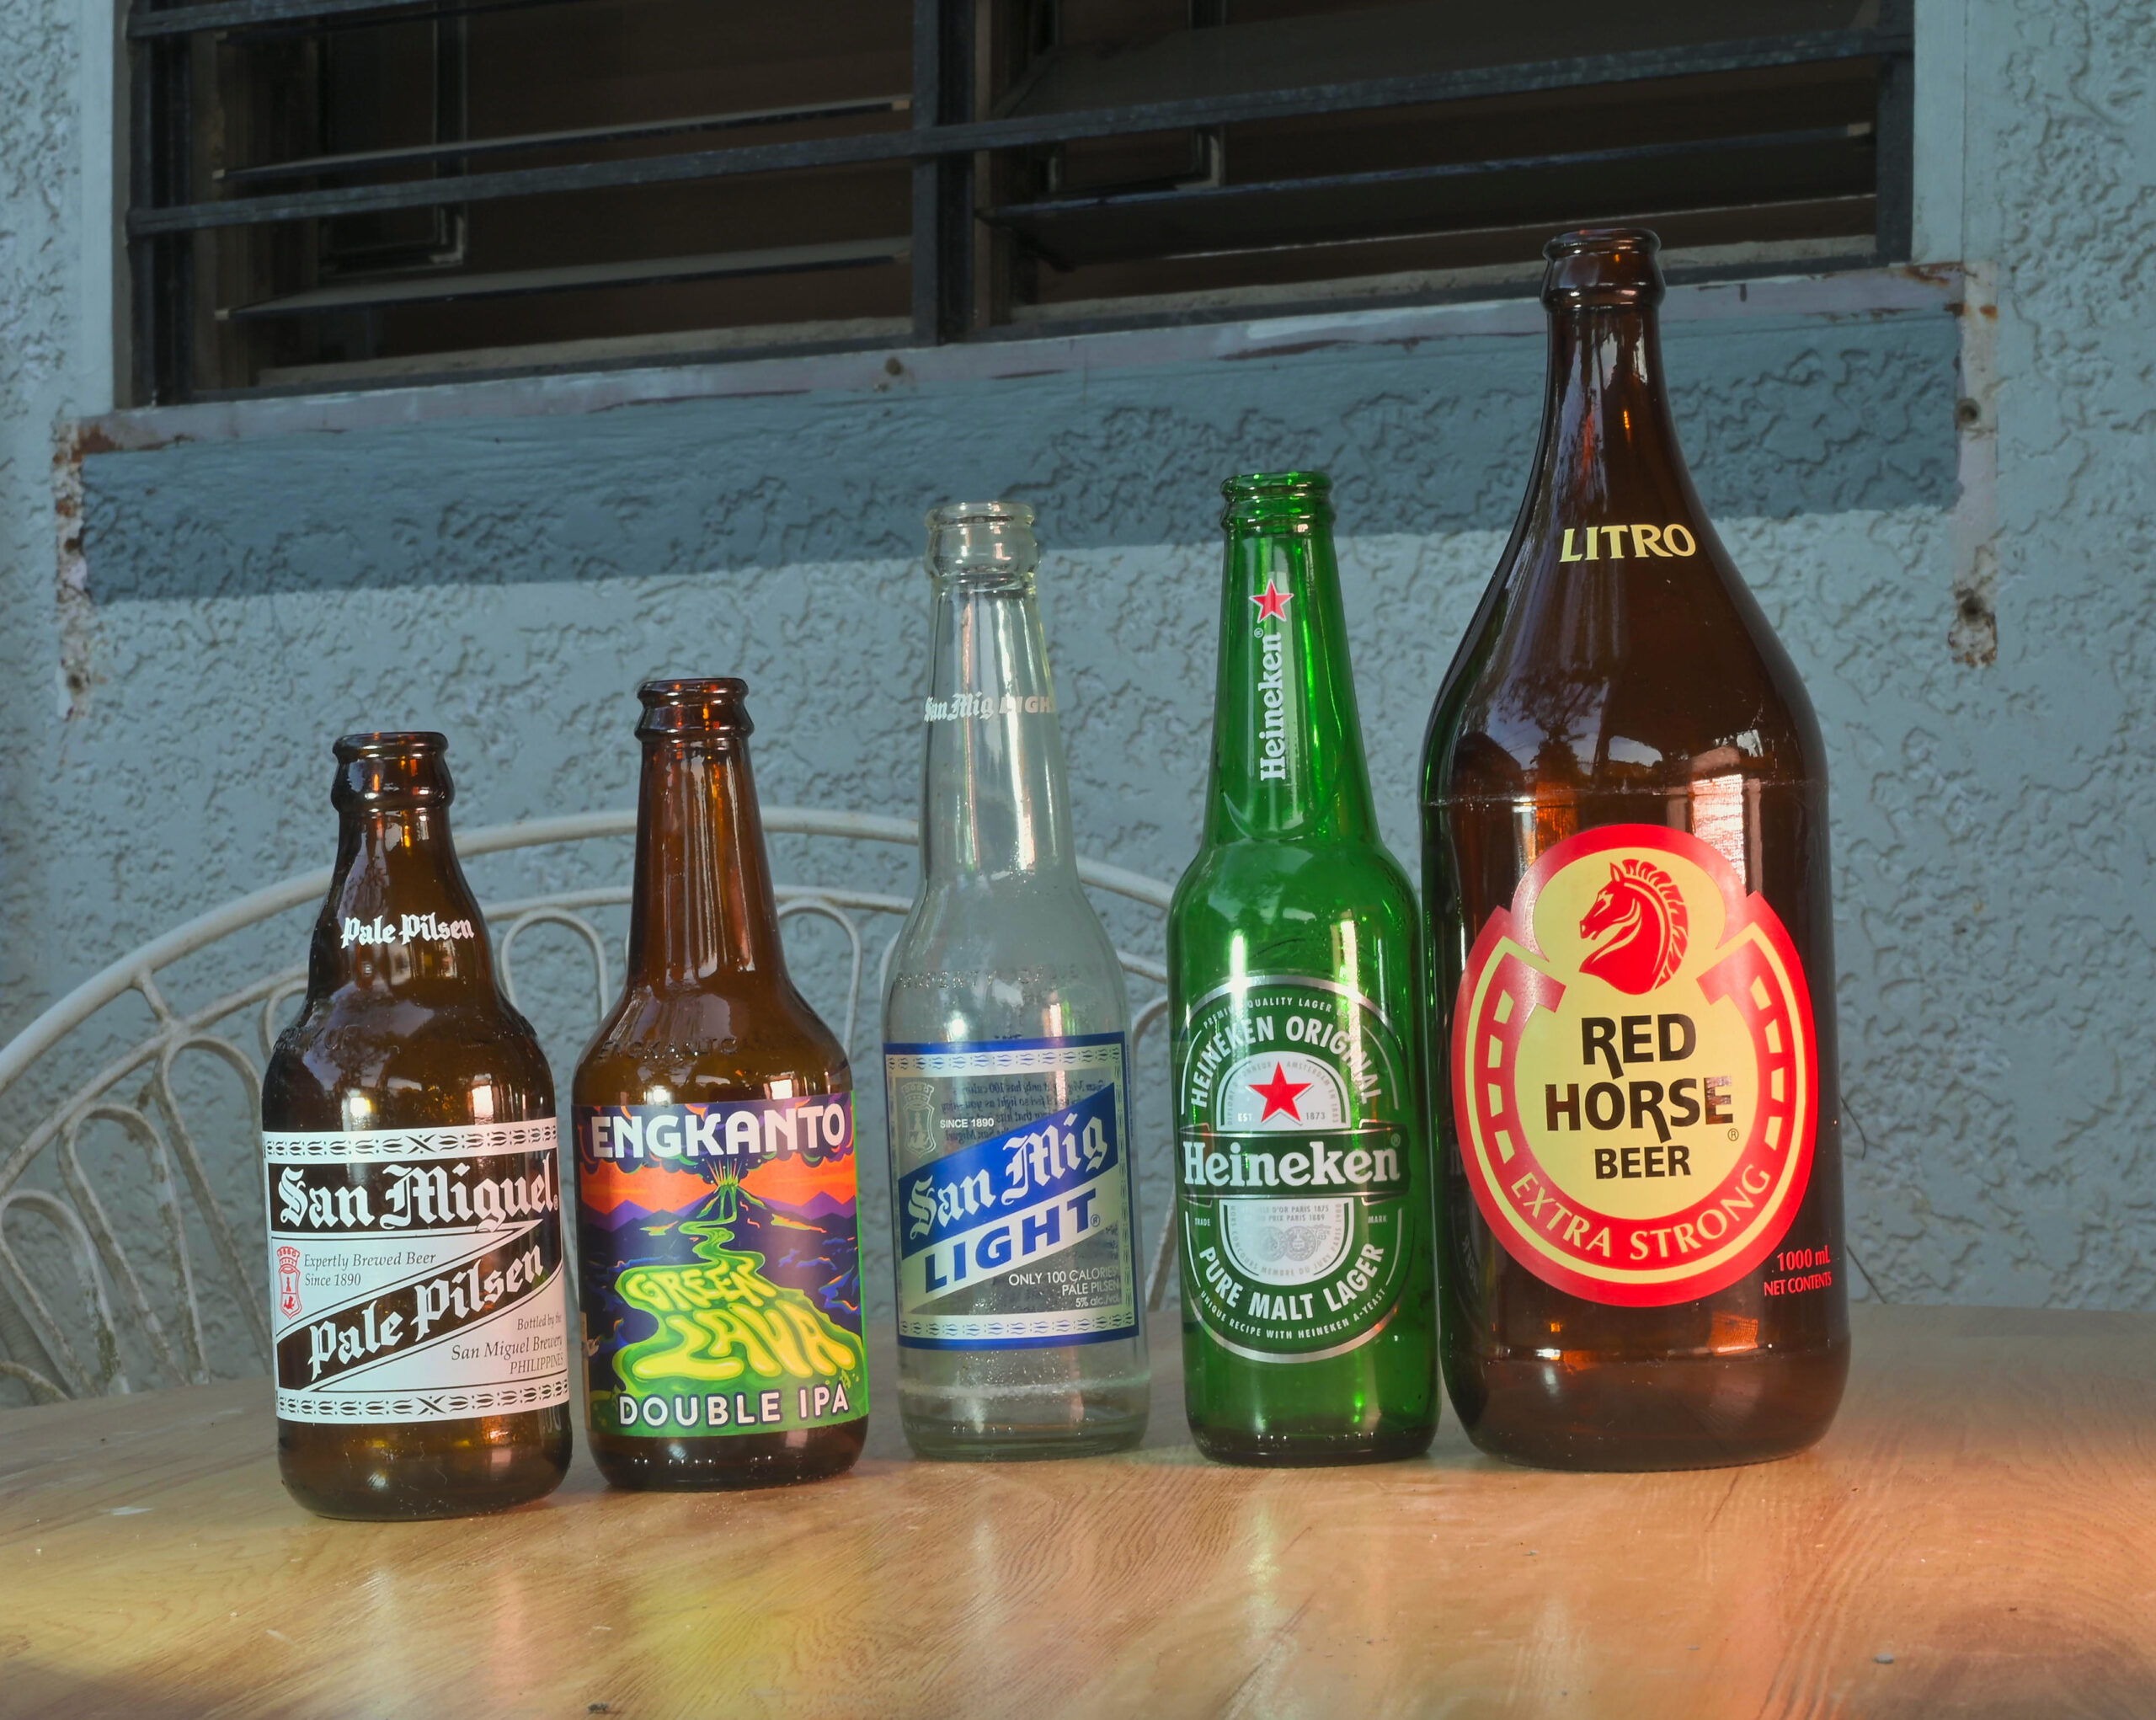 Beer we drank 2022 Pale Pilsen, Heineken , Red Horse, Engkanto and San Mig light.